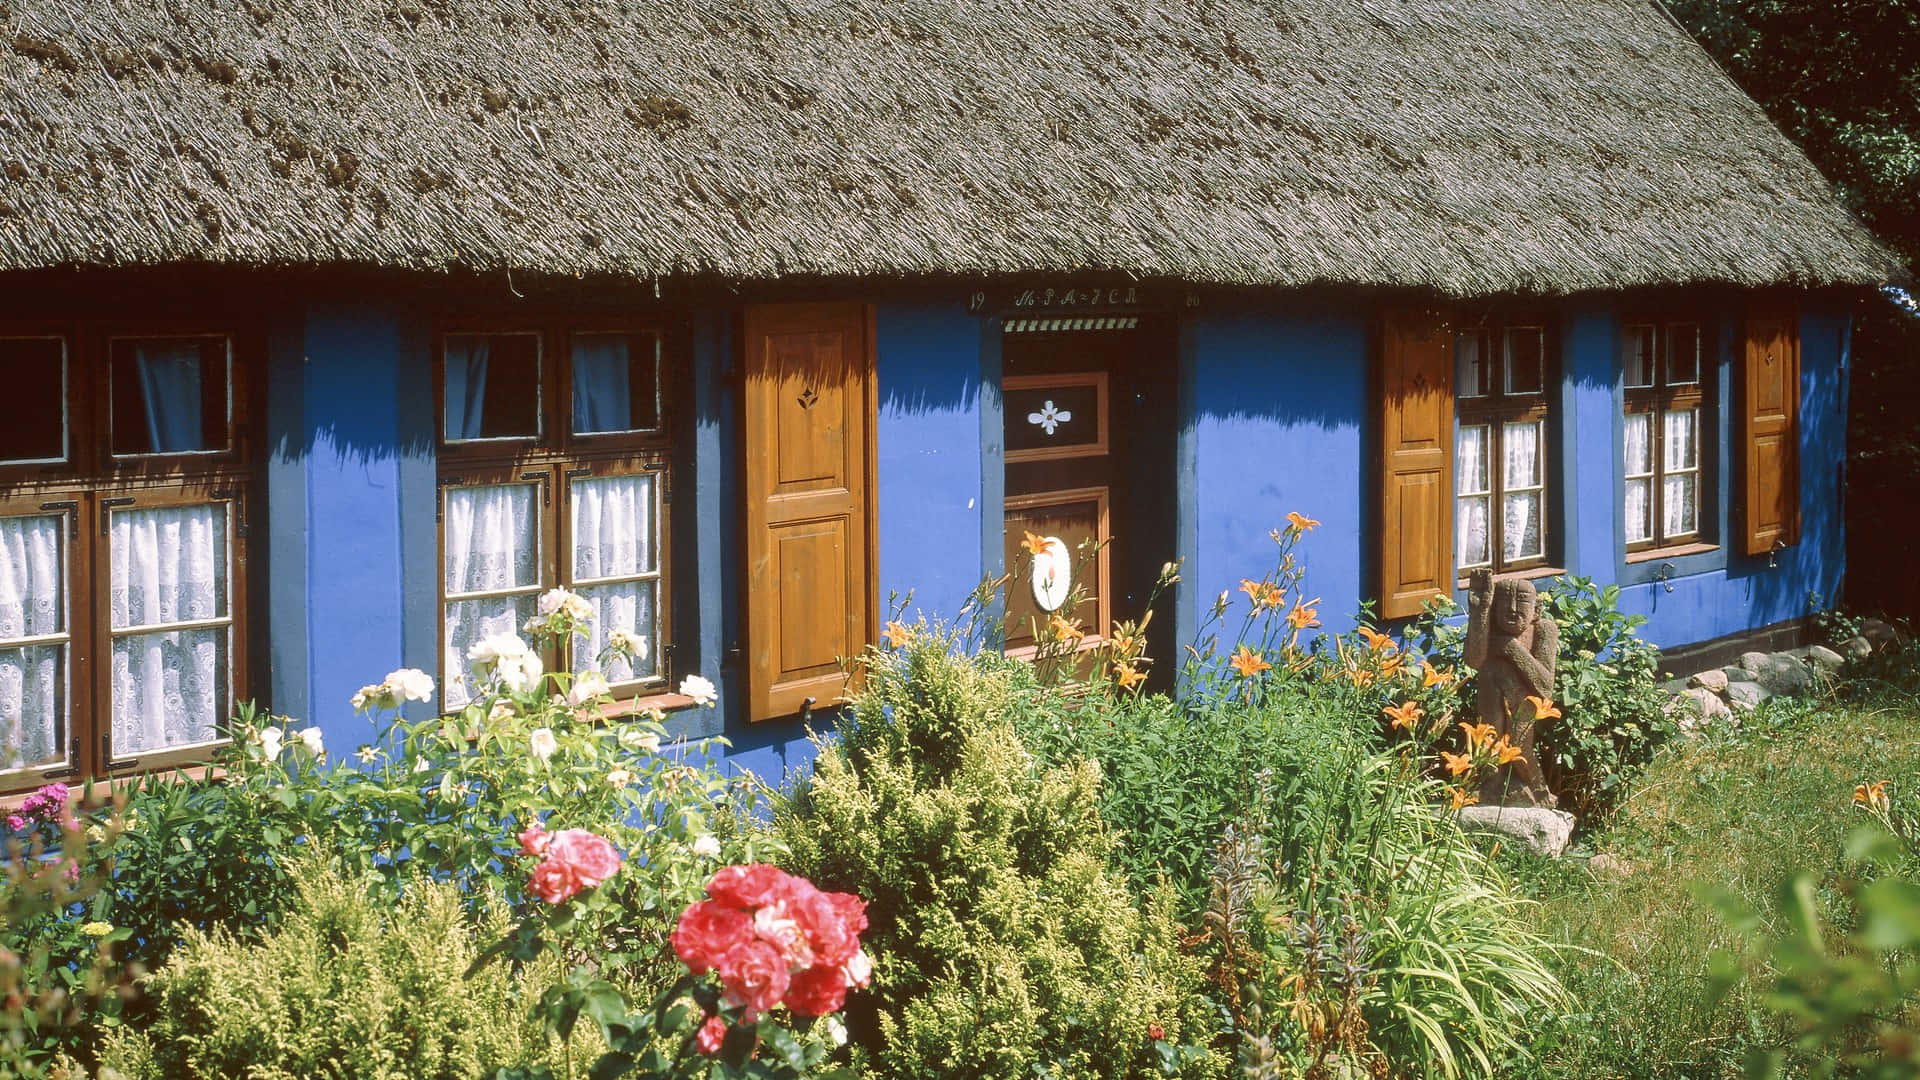 Enchanting Cottage Garden in Full Bloom Wallpaper